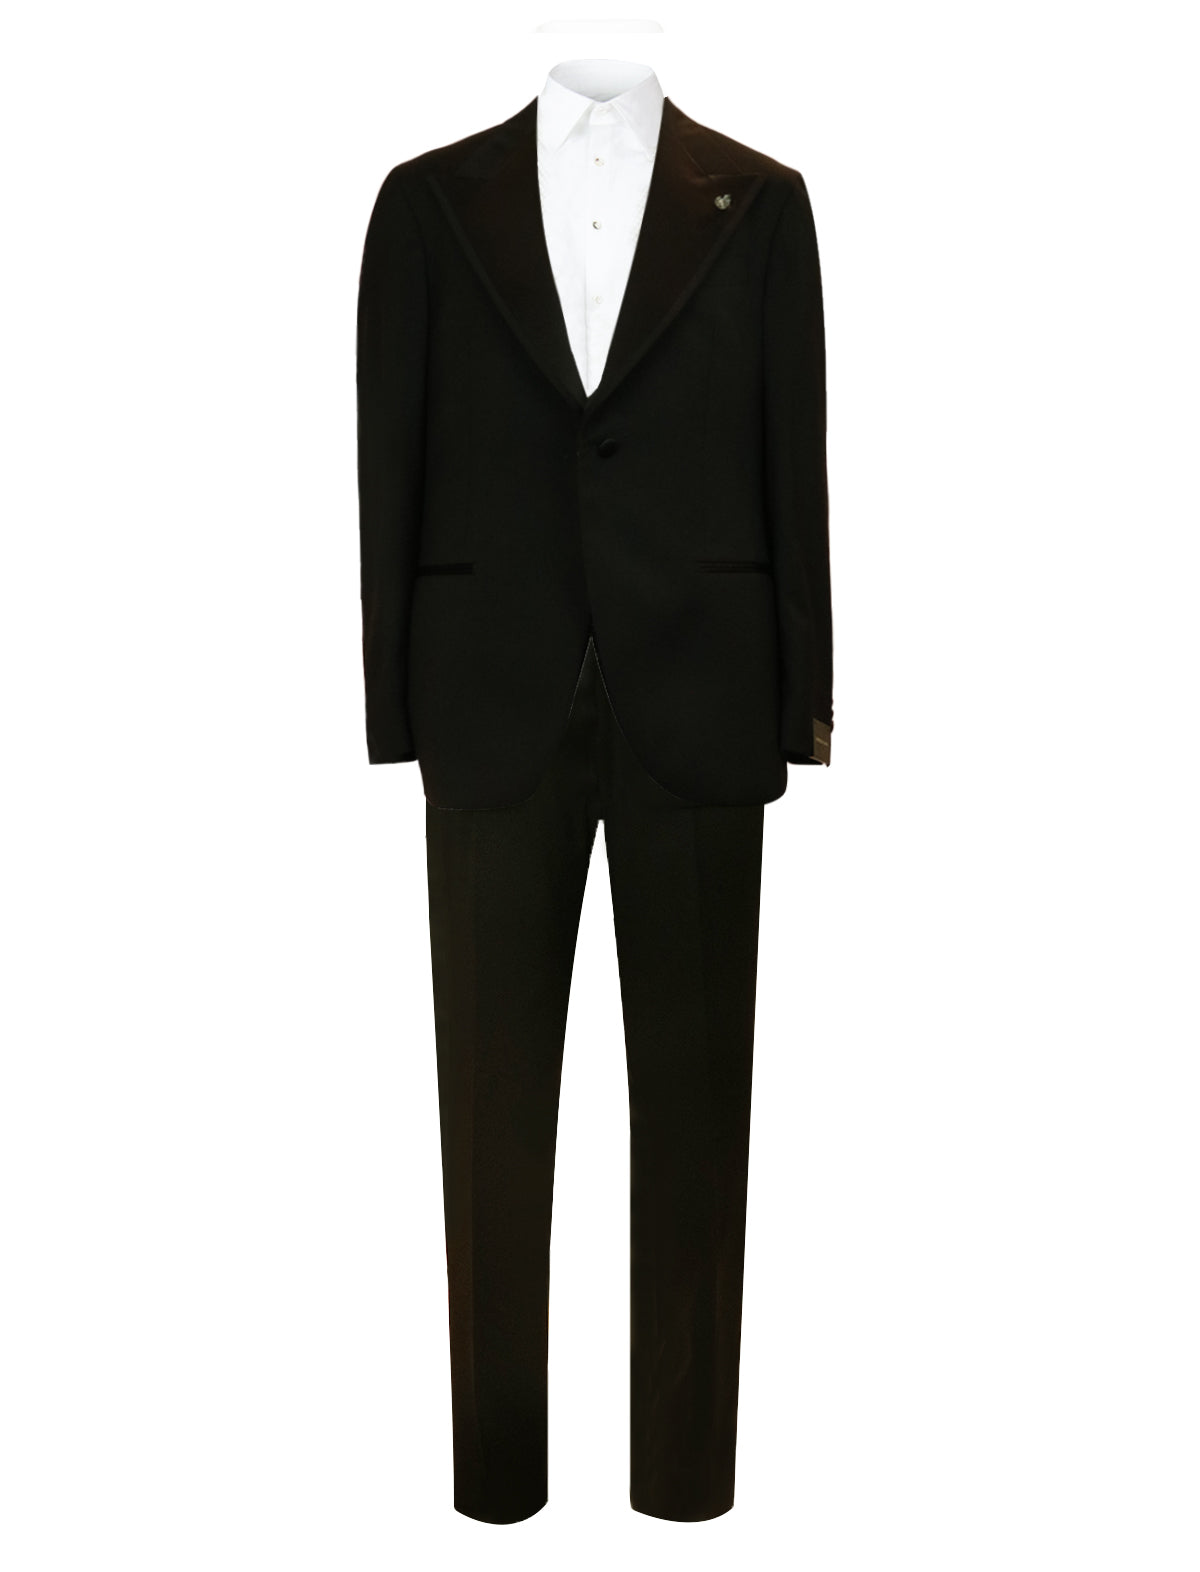 GABRIELE PASINI 2-Piece Formal Suit With Satin Revers In Black